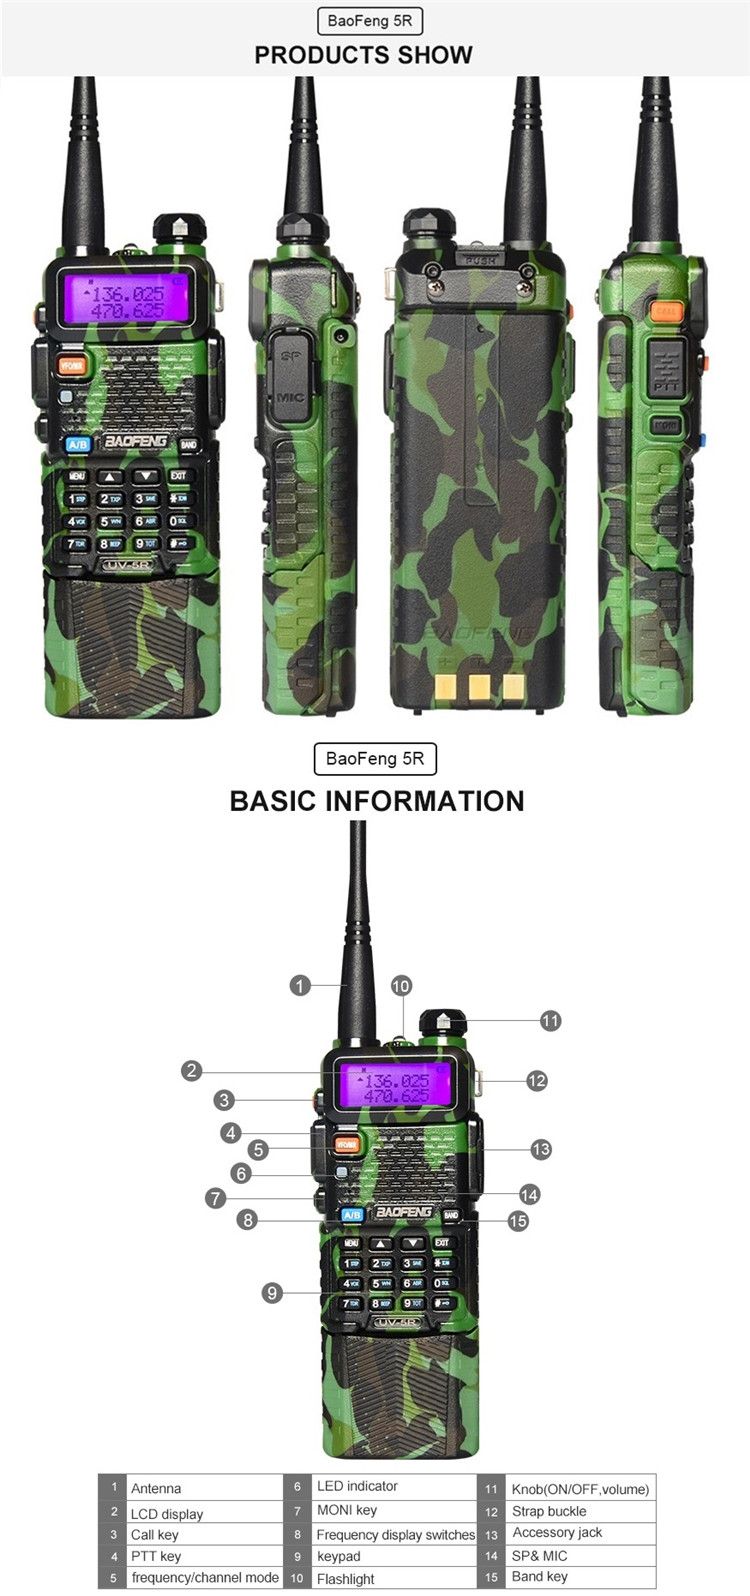 Upgrade-BaoFeng-UV-5R-Camouflage-Walkie-Talkie-VHUHF-Dual-Band-Two-Way-Radio-Transceiver-3800mah-1139973